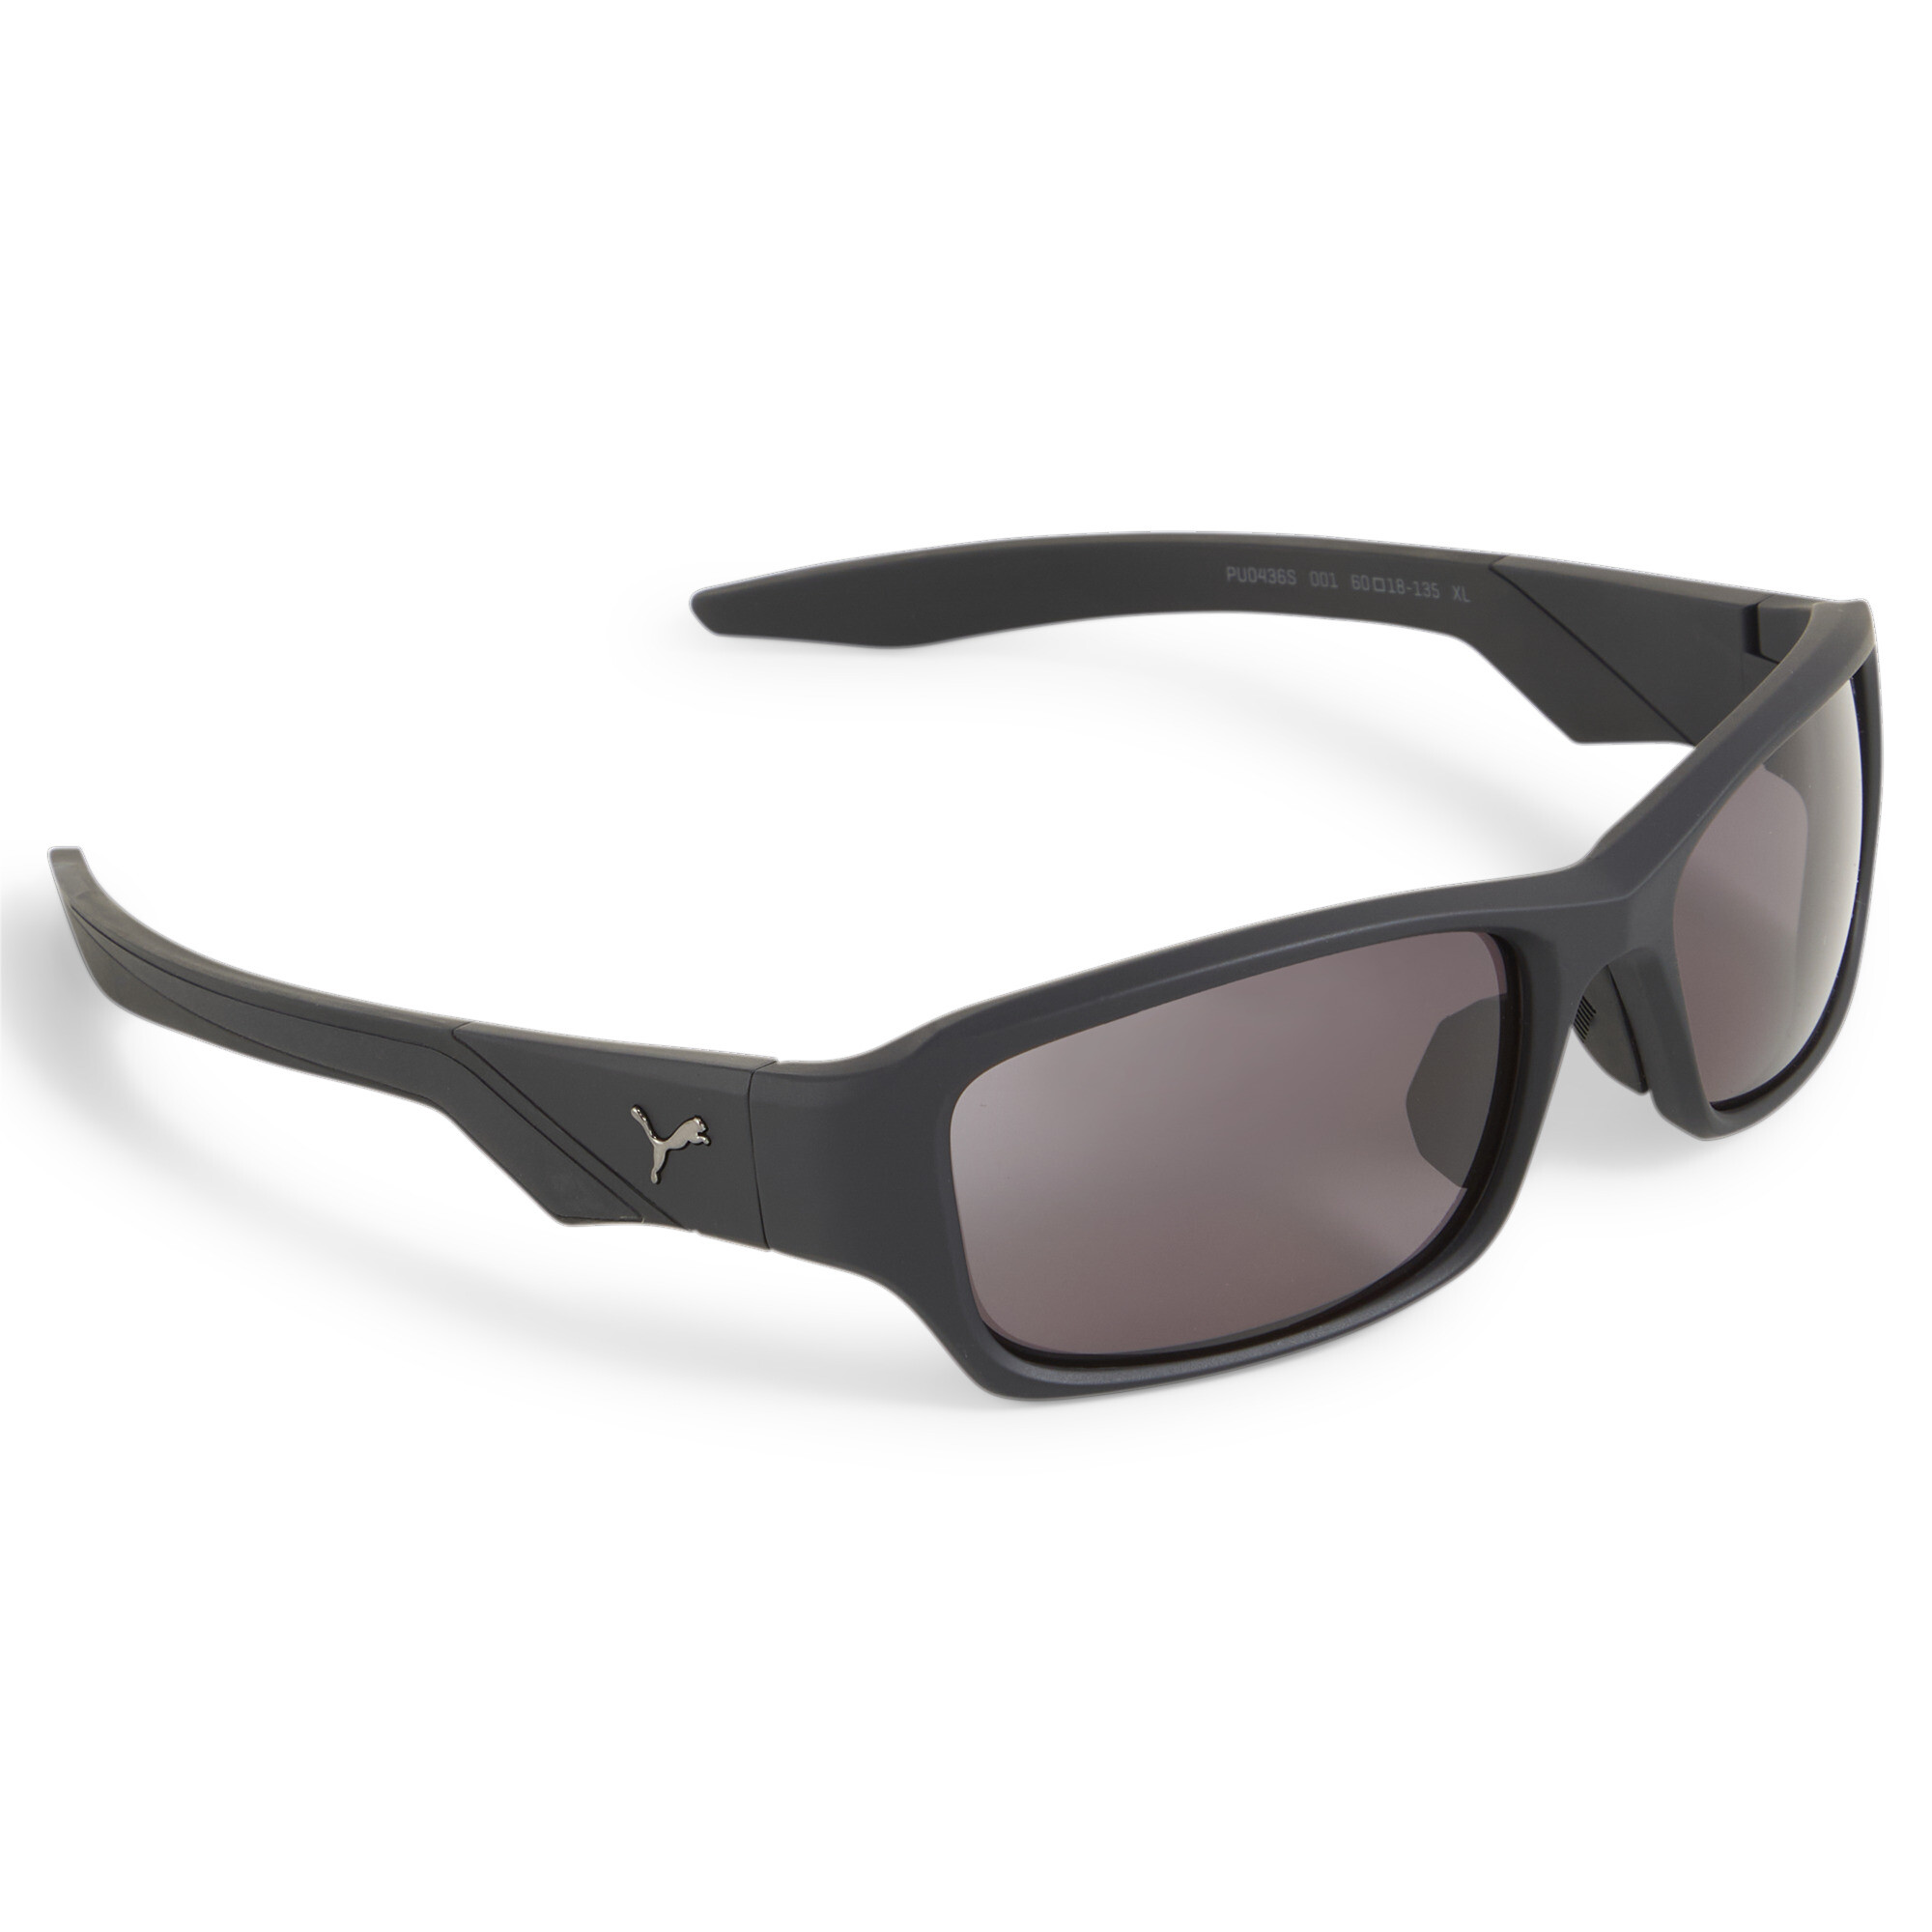 Puma Sport Lifestyle Sunglasses, Black, Accessories